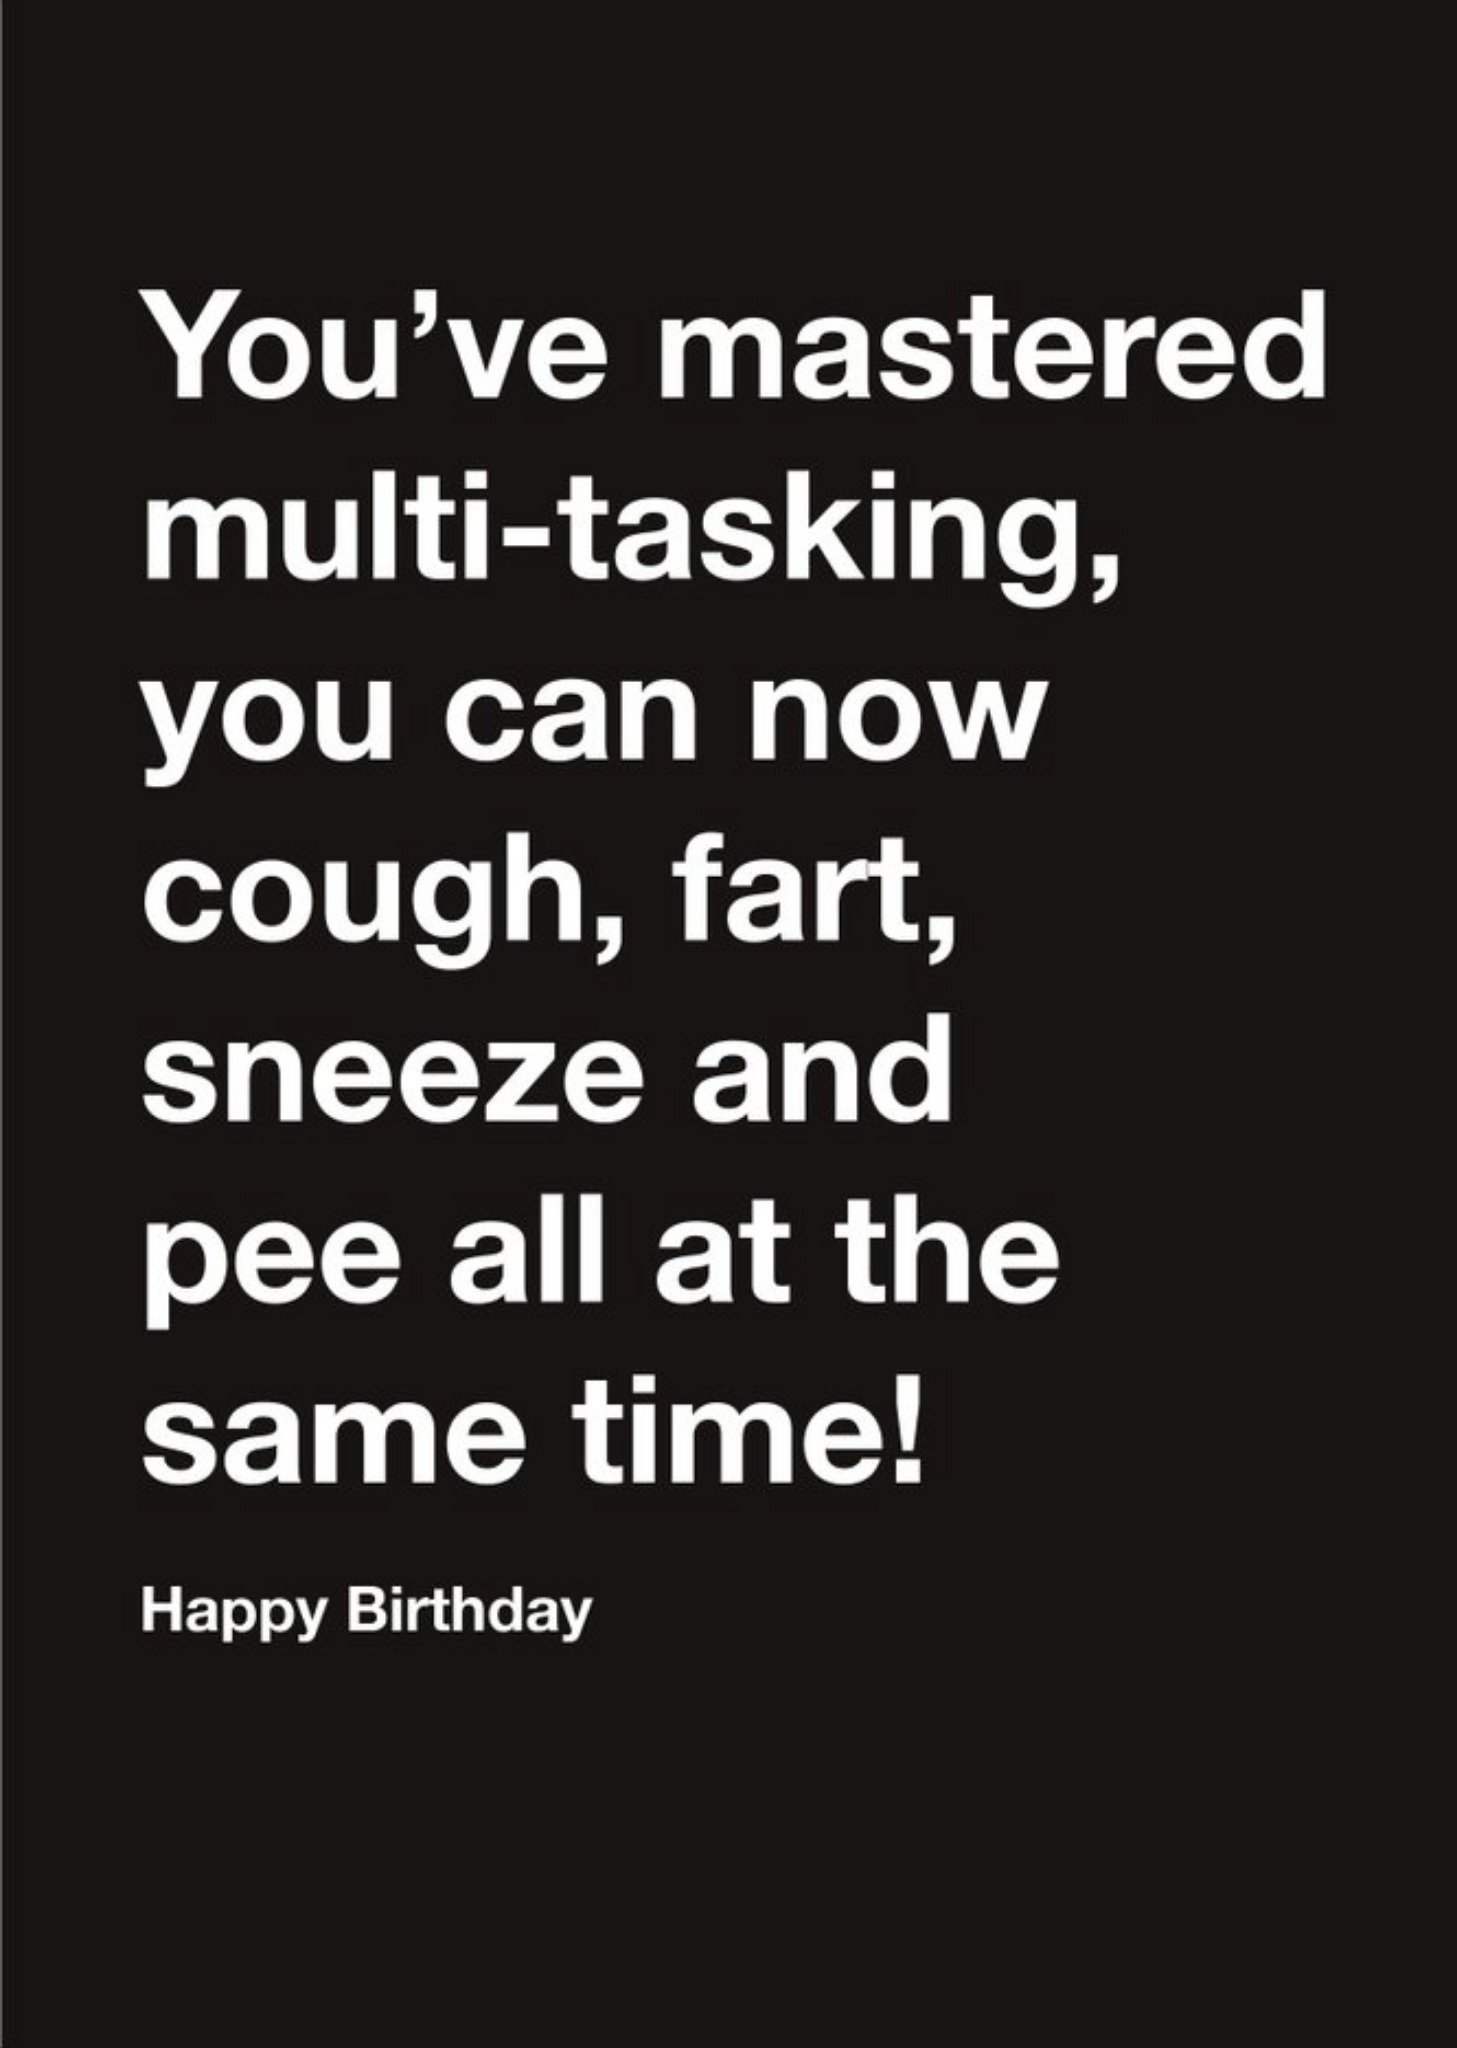 Moonpig Carte Blanche Mastered Multi-Tasking Happy Birthday Card Ecard